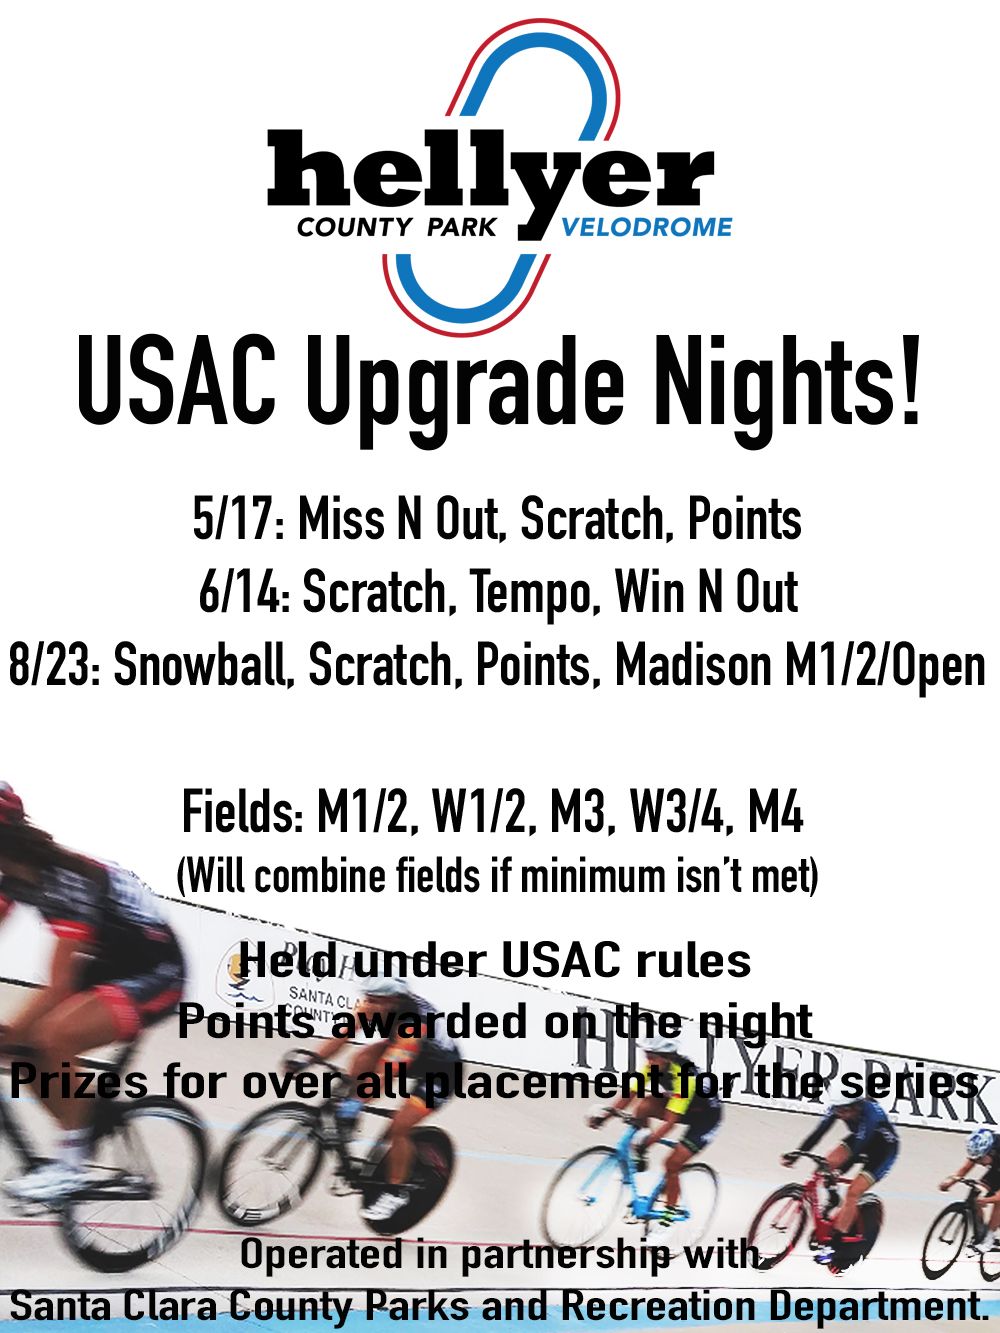 Hellyer Velodrome: Friday Night USAC Upgrade Races